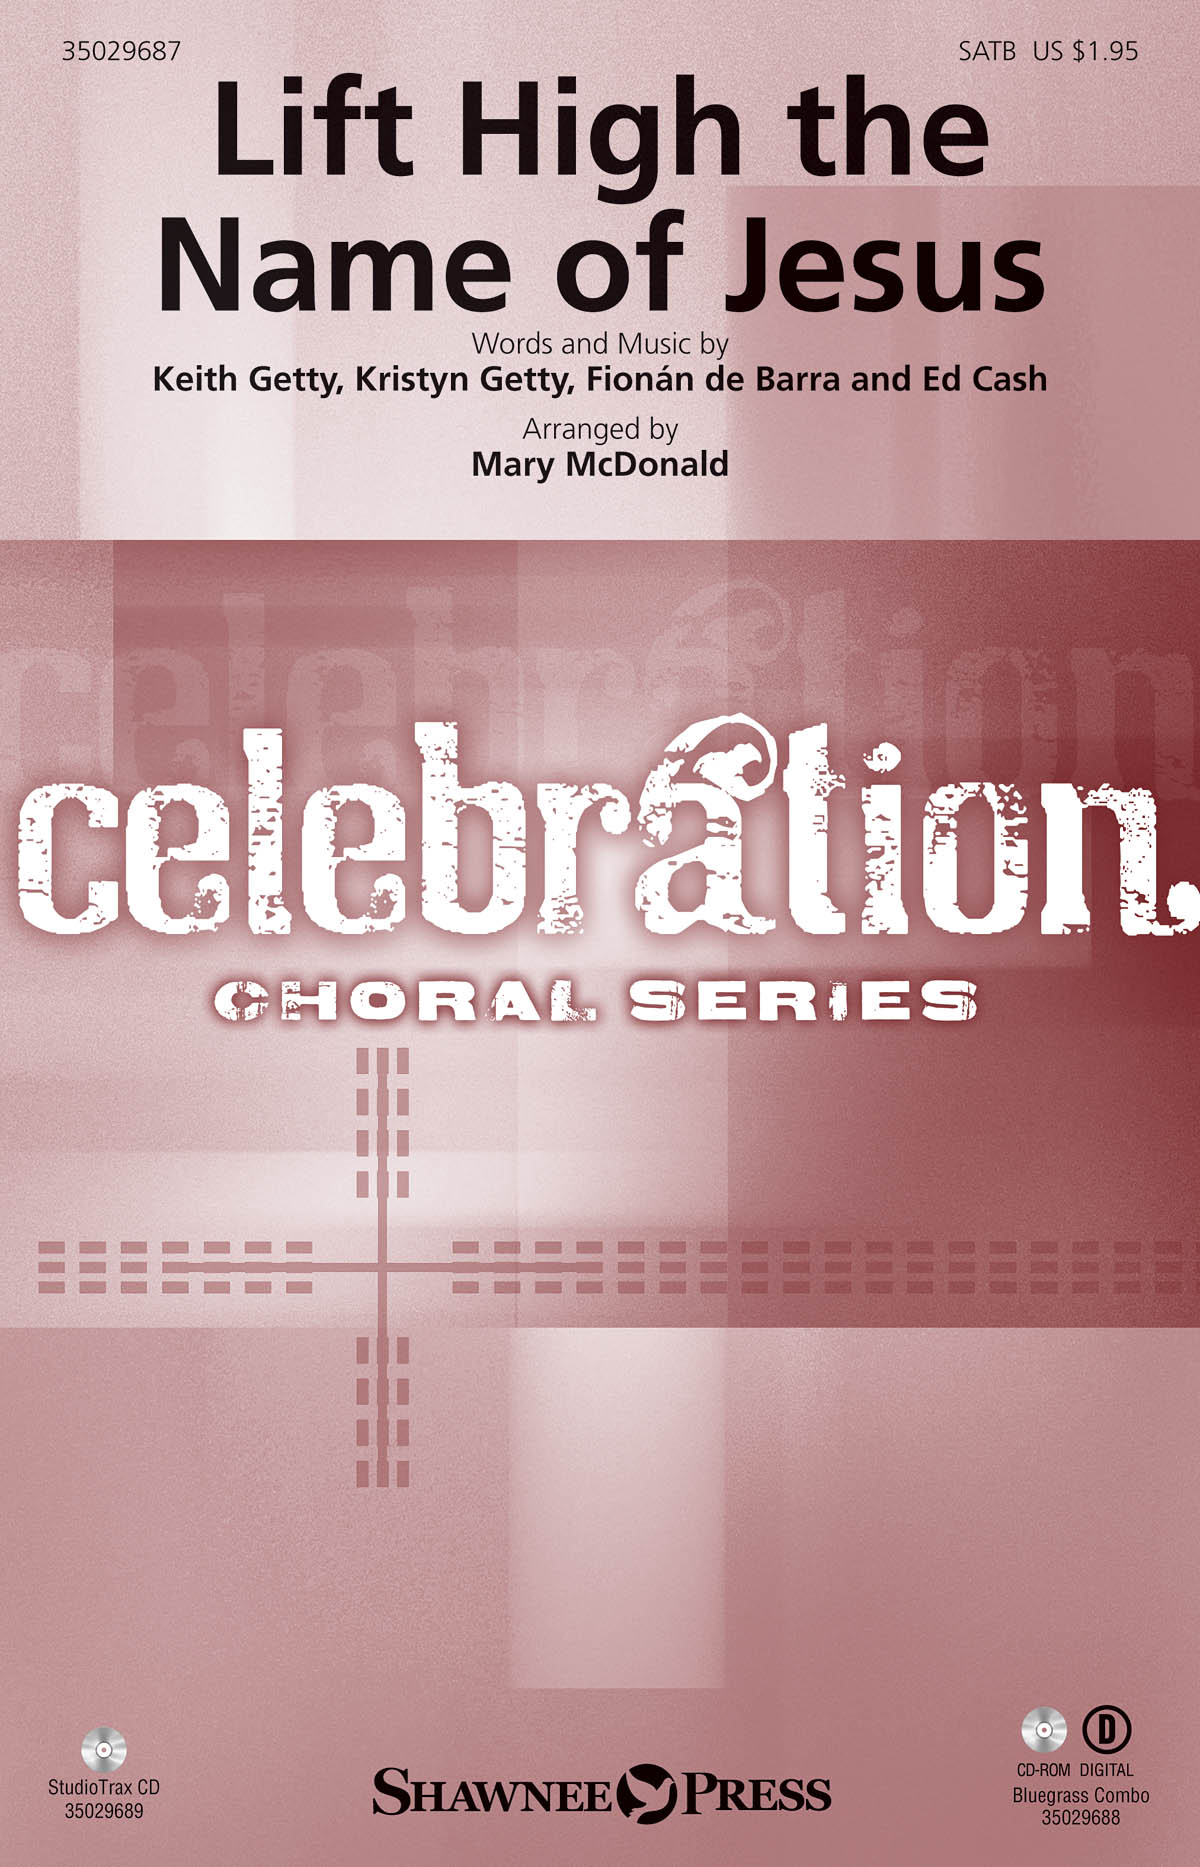 Keith Getty Kristyn Getty Fionßn de Barra Ed Cash: Lift High the Name of Jesus: